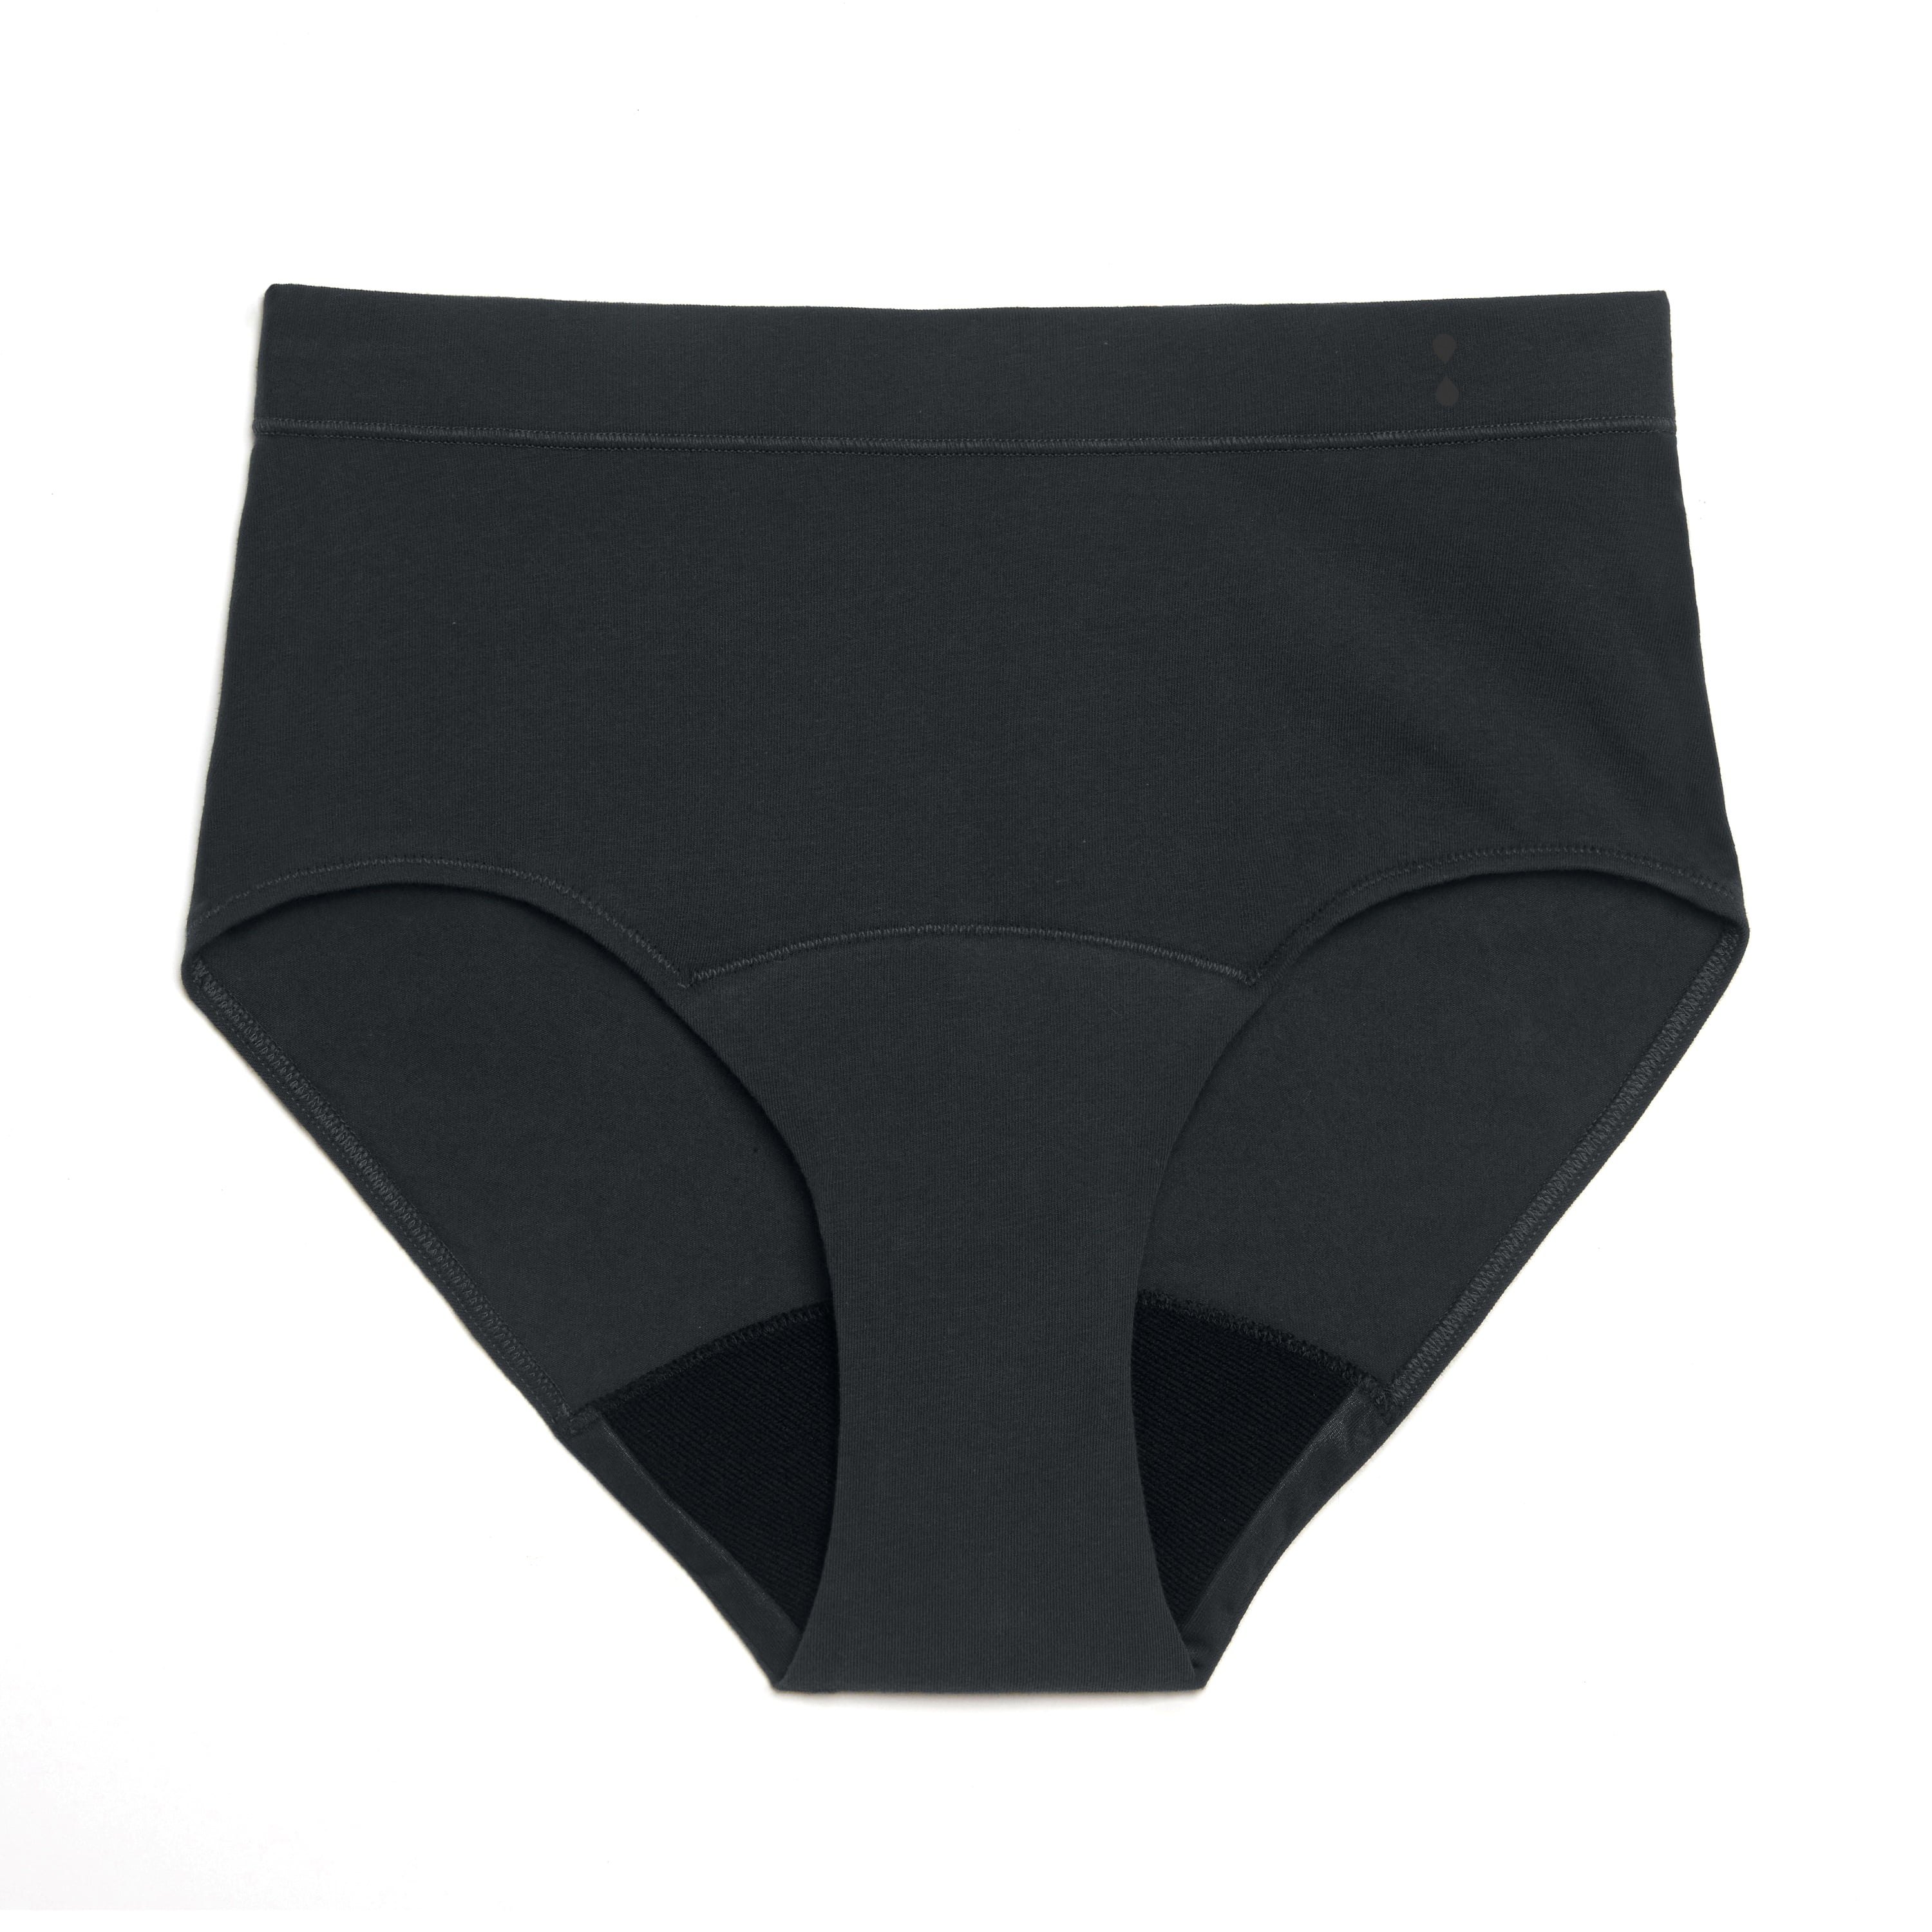 Thinx for All™ Women's Hi-Waist Period Underwear, All Day Absorbency, Black  Haze